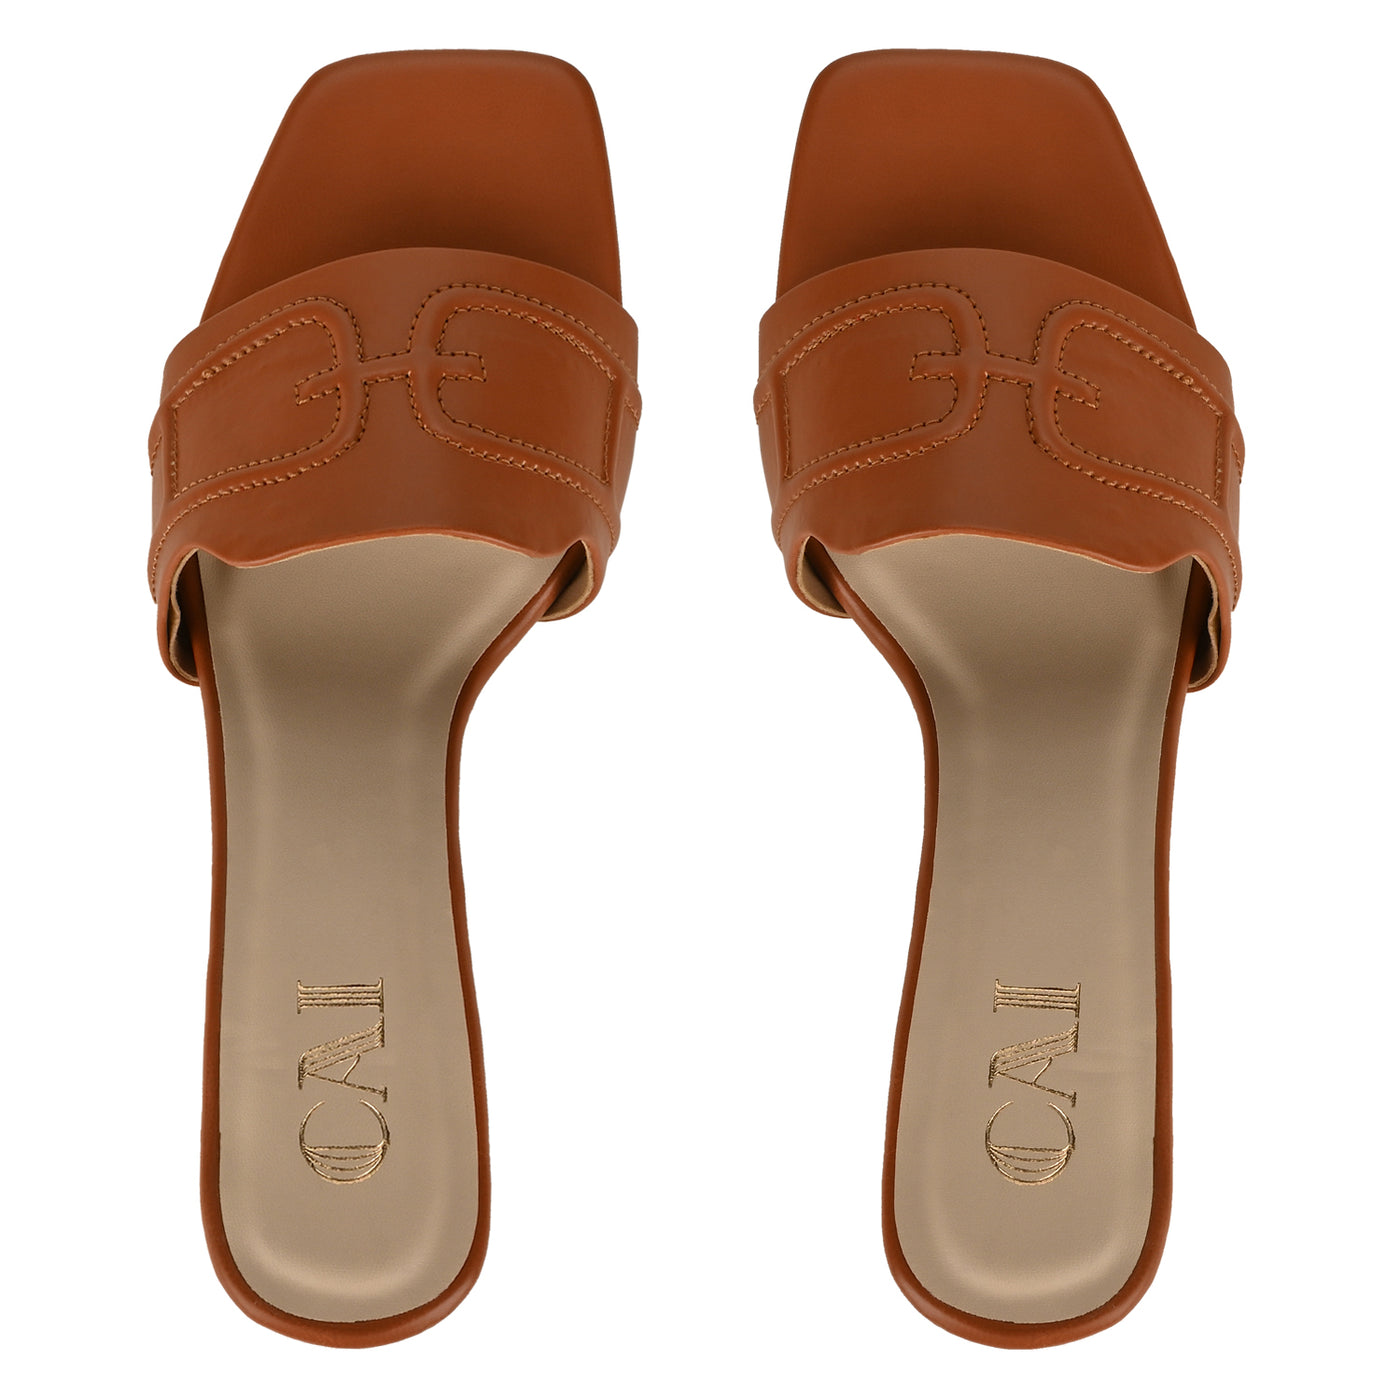 Ginger Peep toe Platform High Heels | Tajna Shoes – Tajna Club